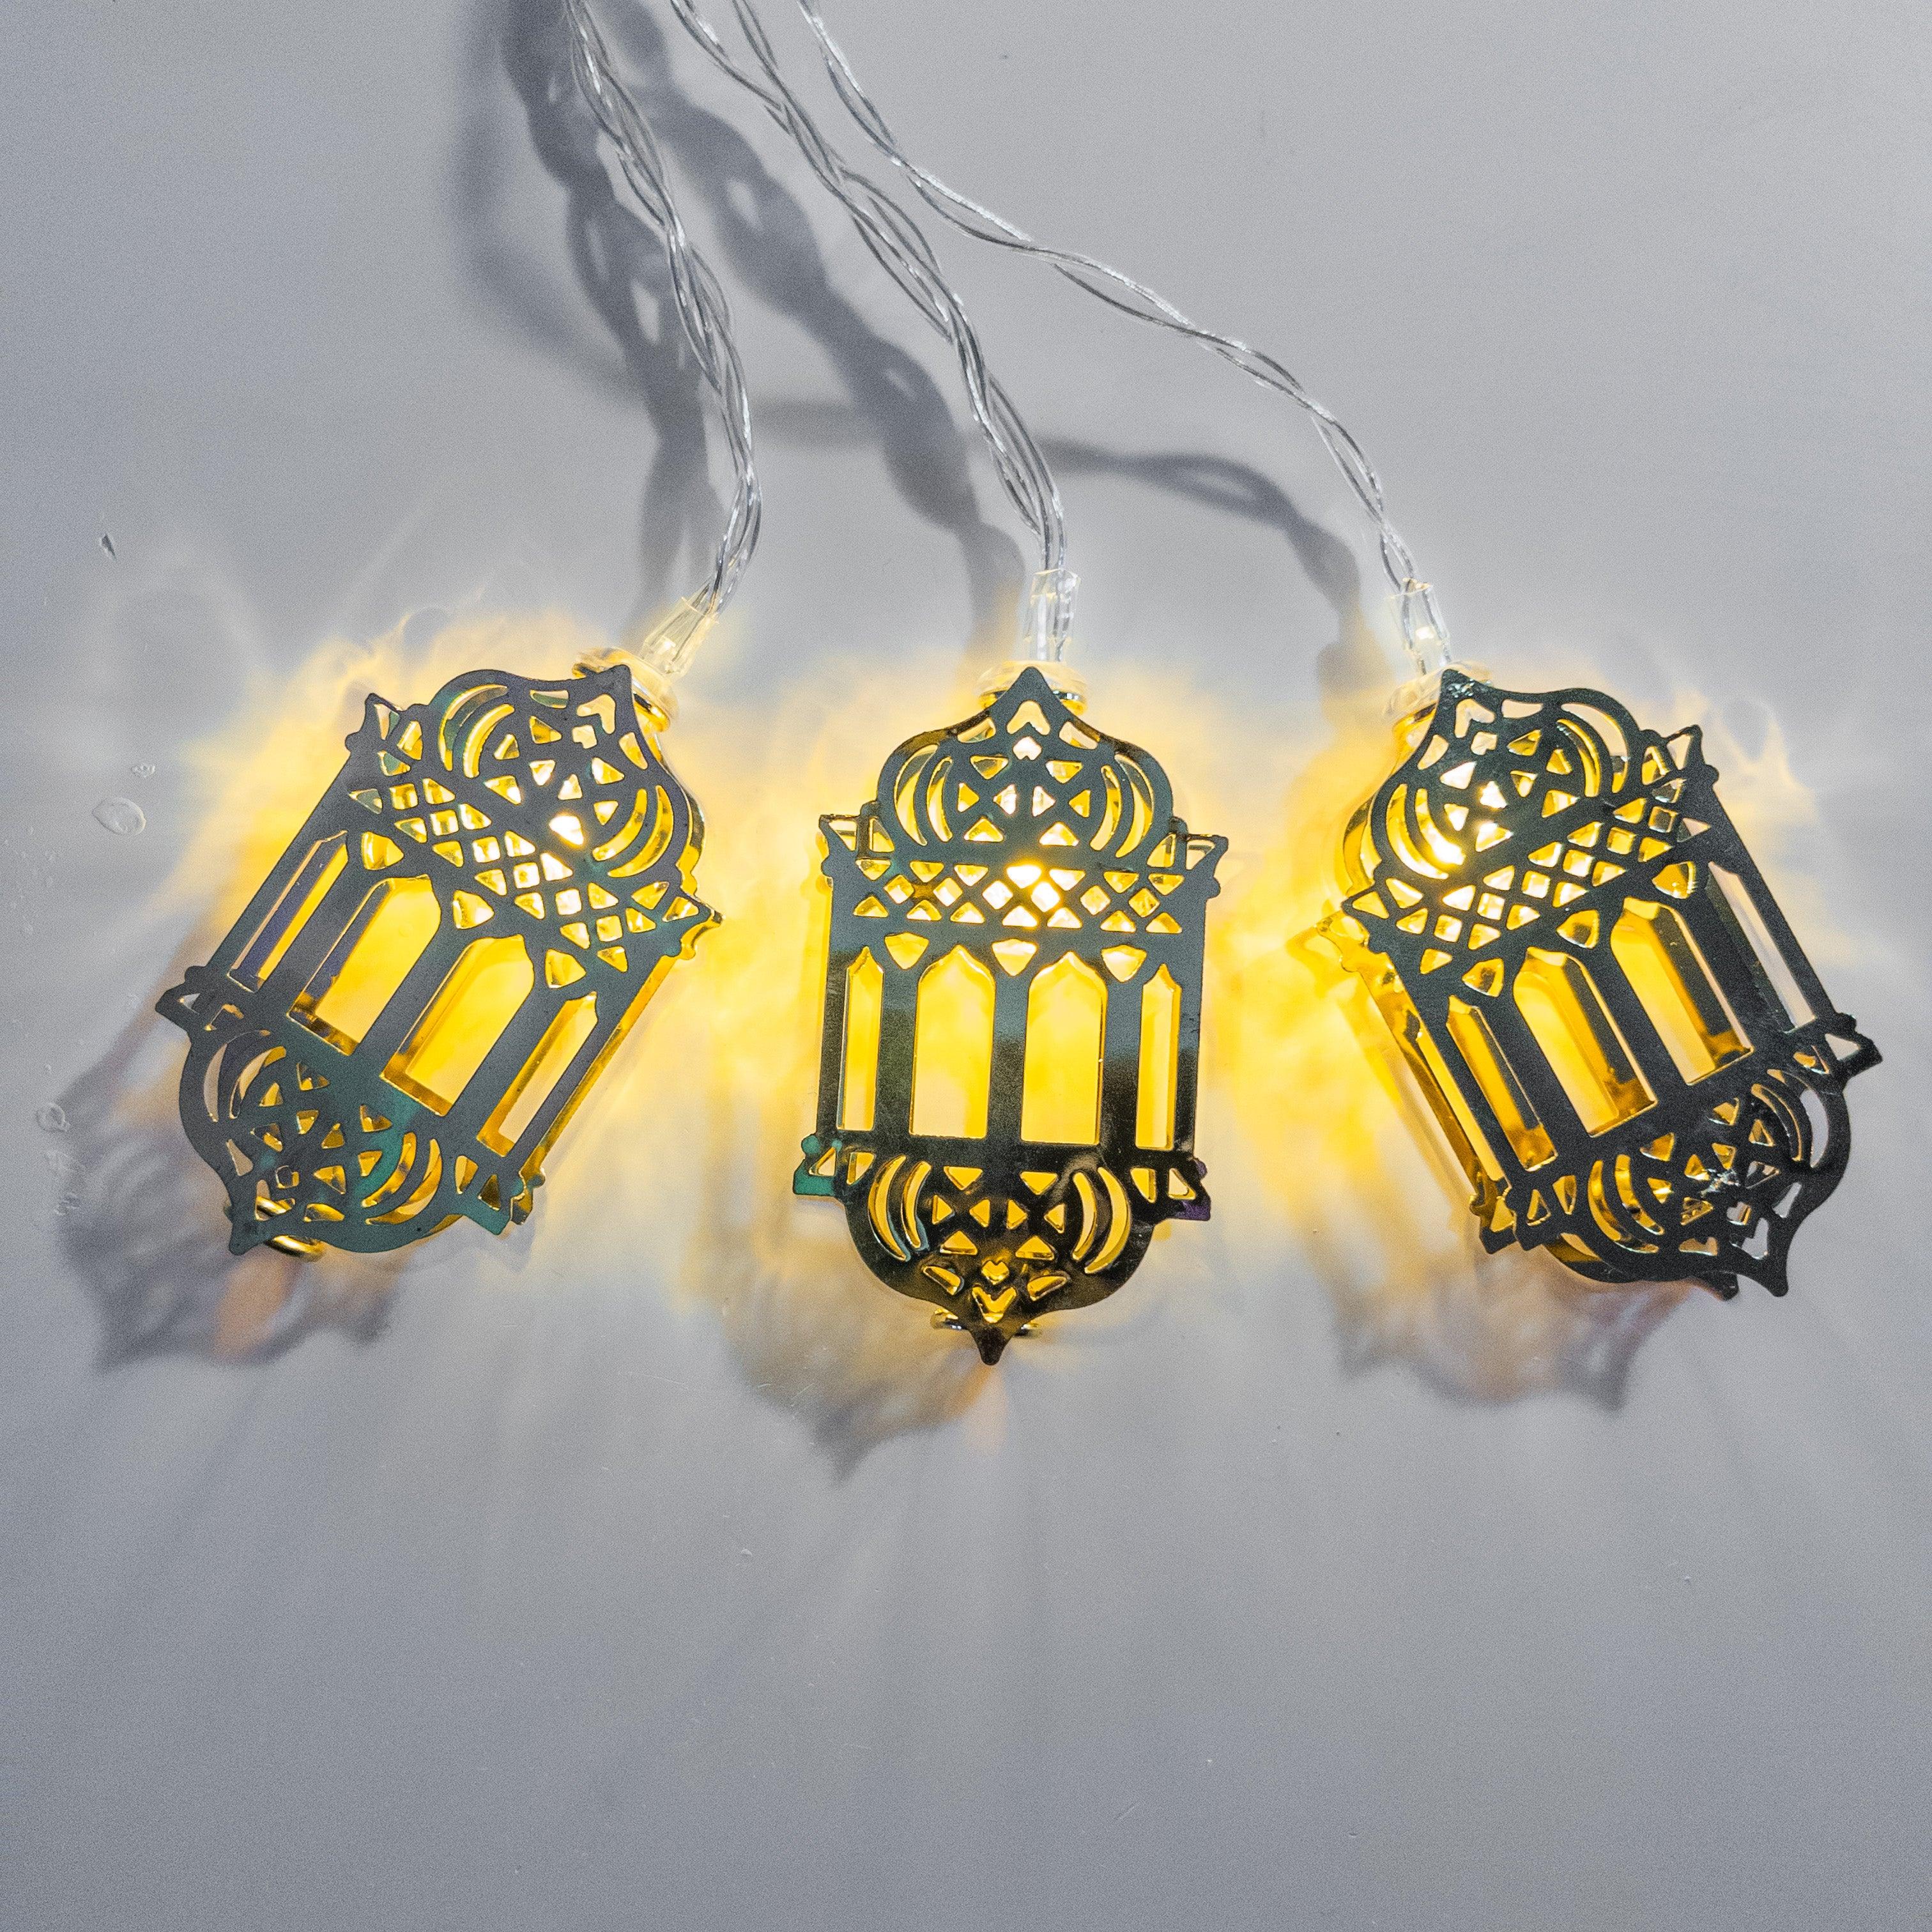 Lantern-Shaped LED String Lights - eRayyan